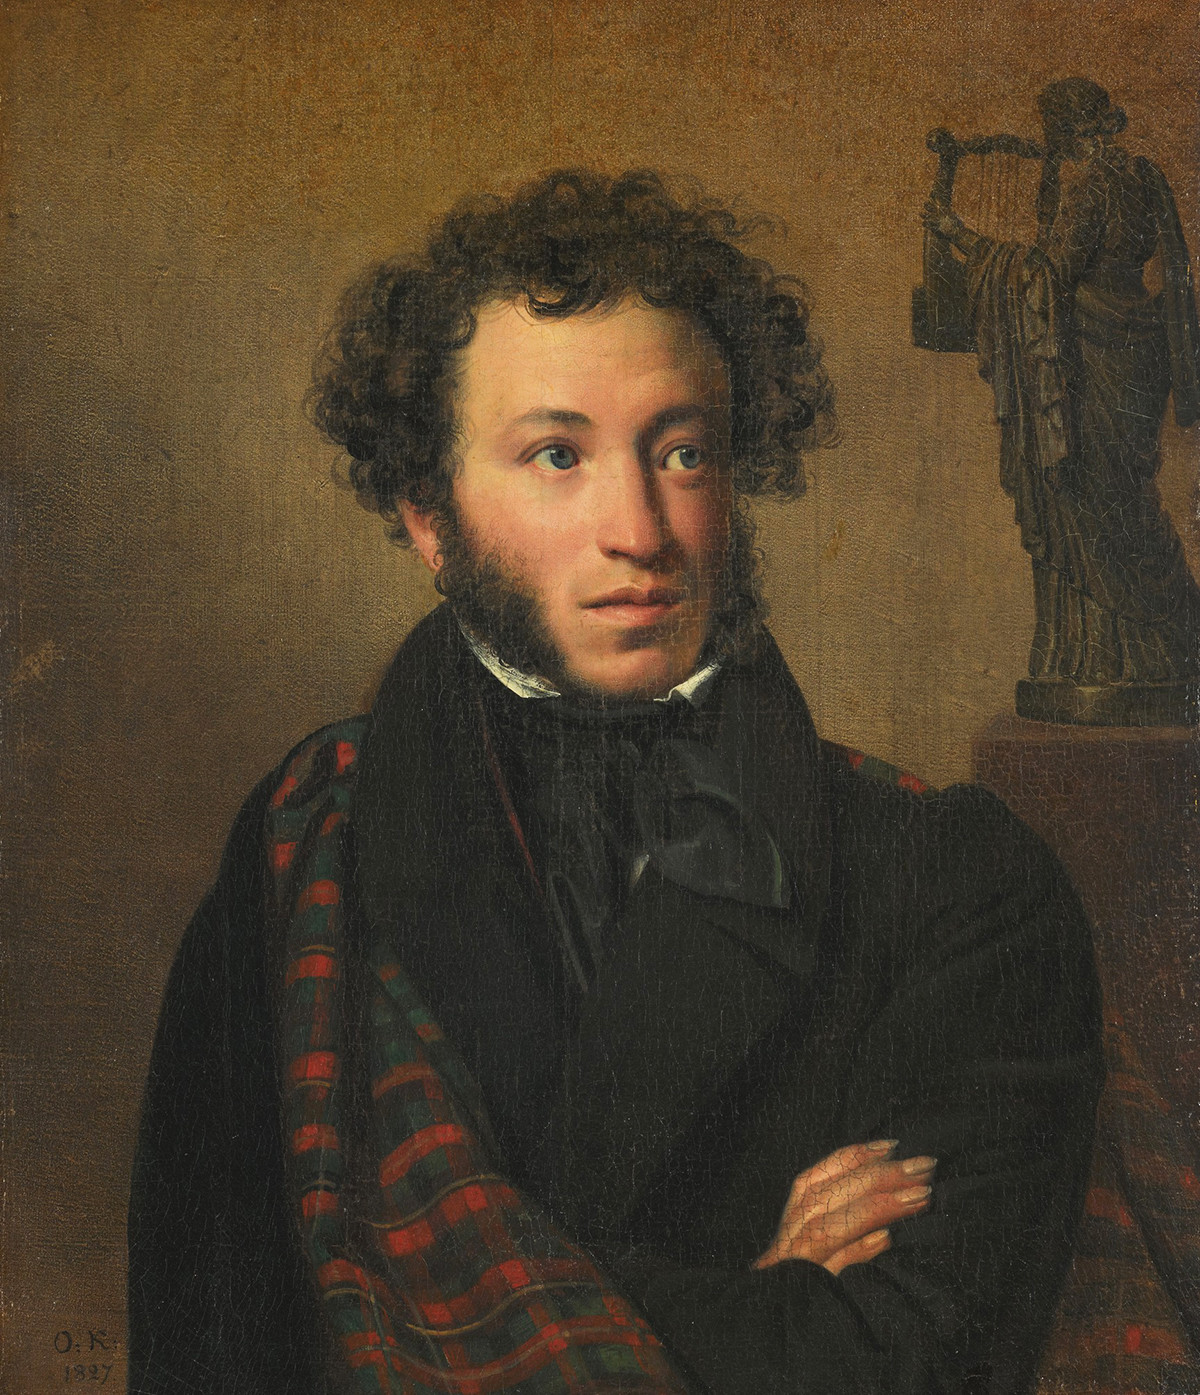 Portrait of Alexander Pushkin, by Orest Kiprensky.